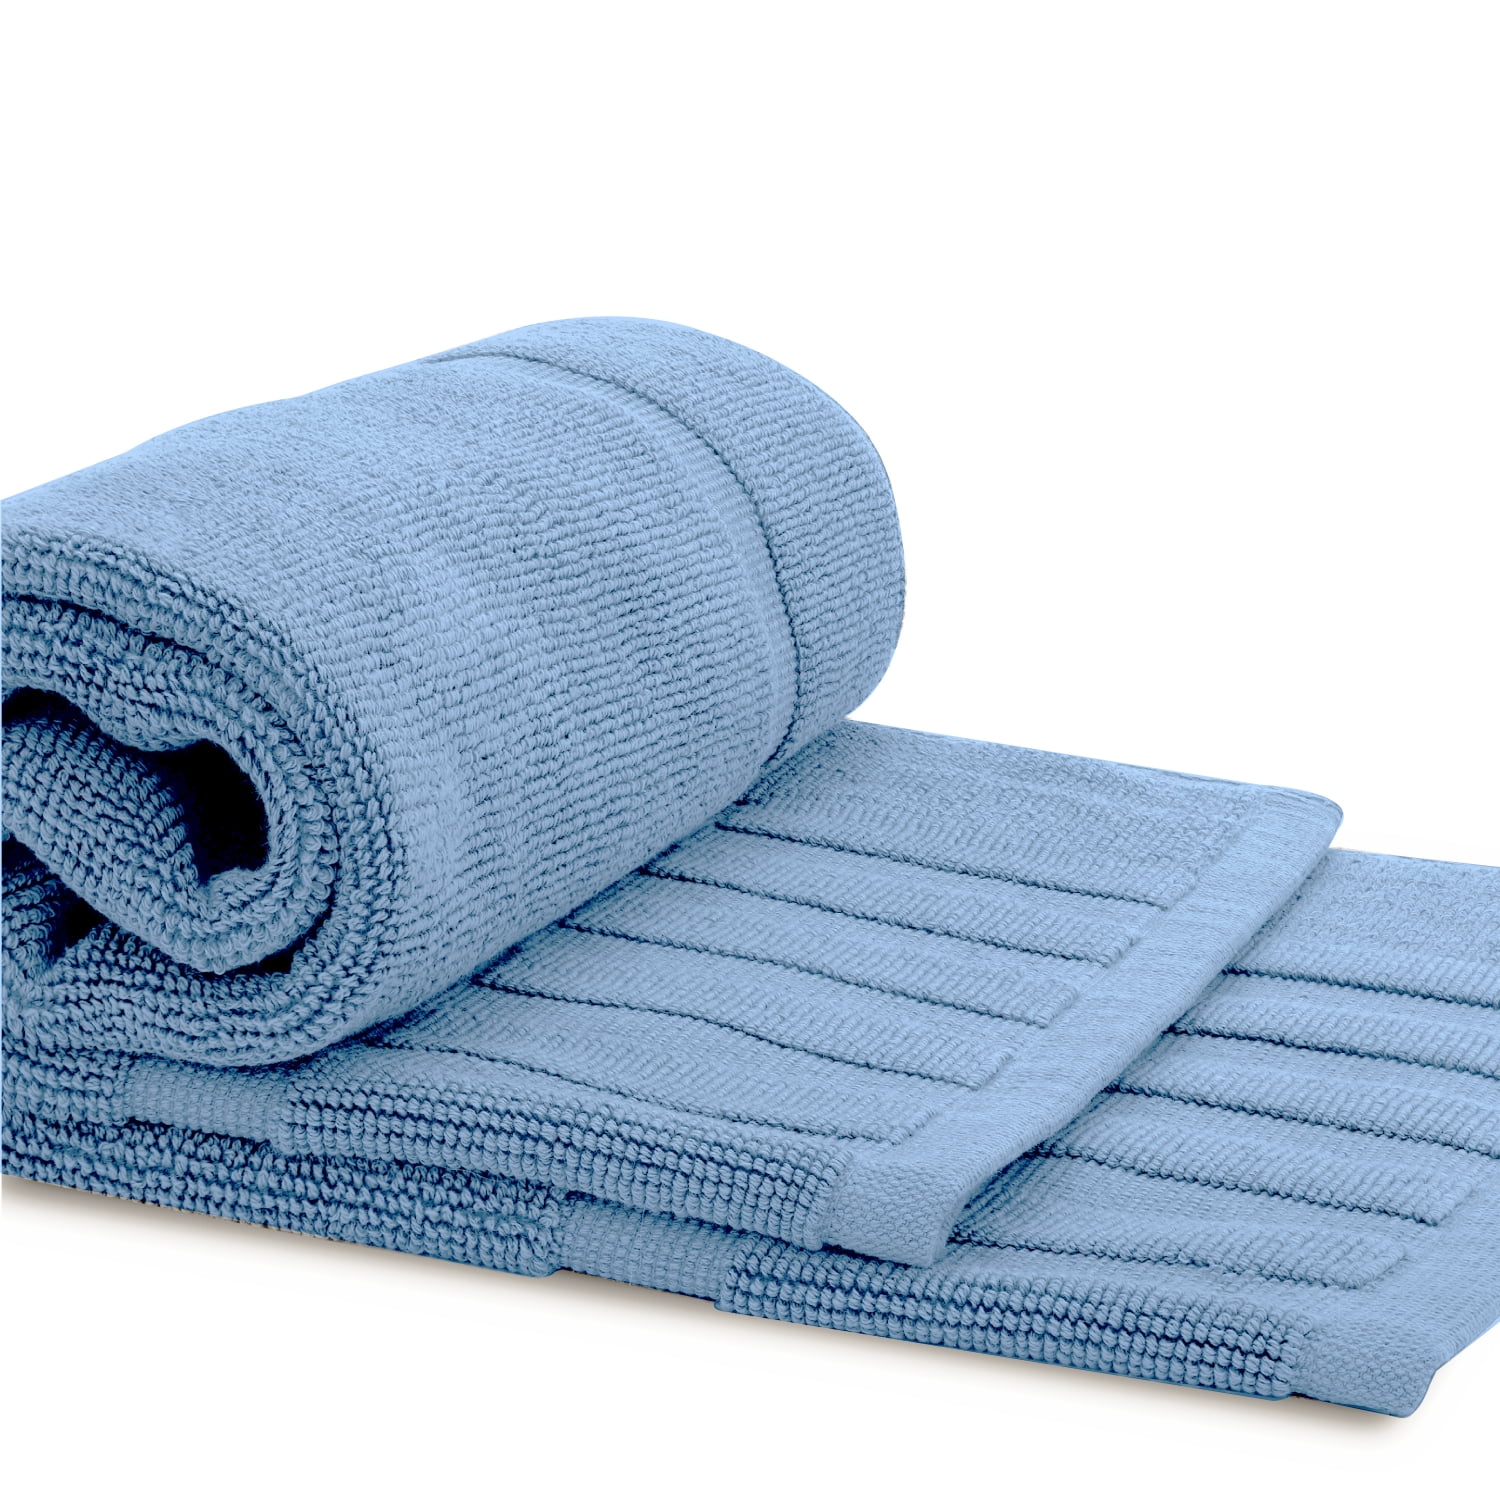 American Soft Linen 20x34 inch 100% Cotton Non-Slip Bath Rug - 35 Set Case Pack Colonial-Blue